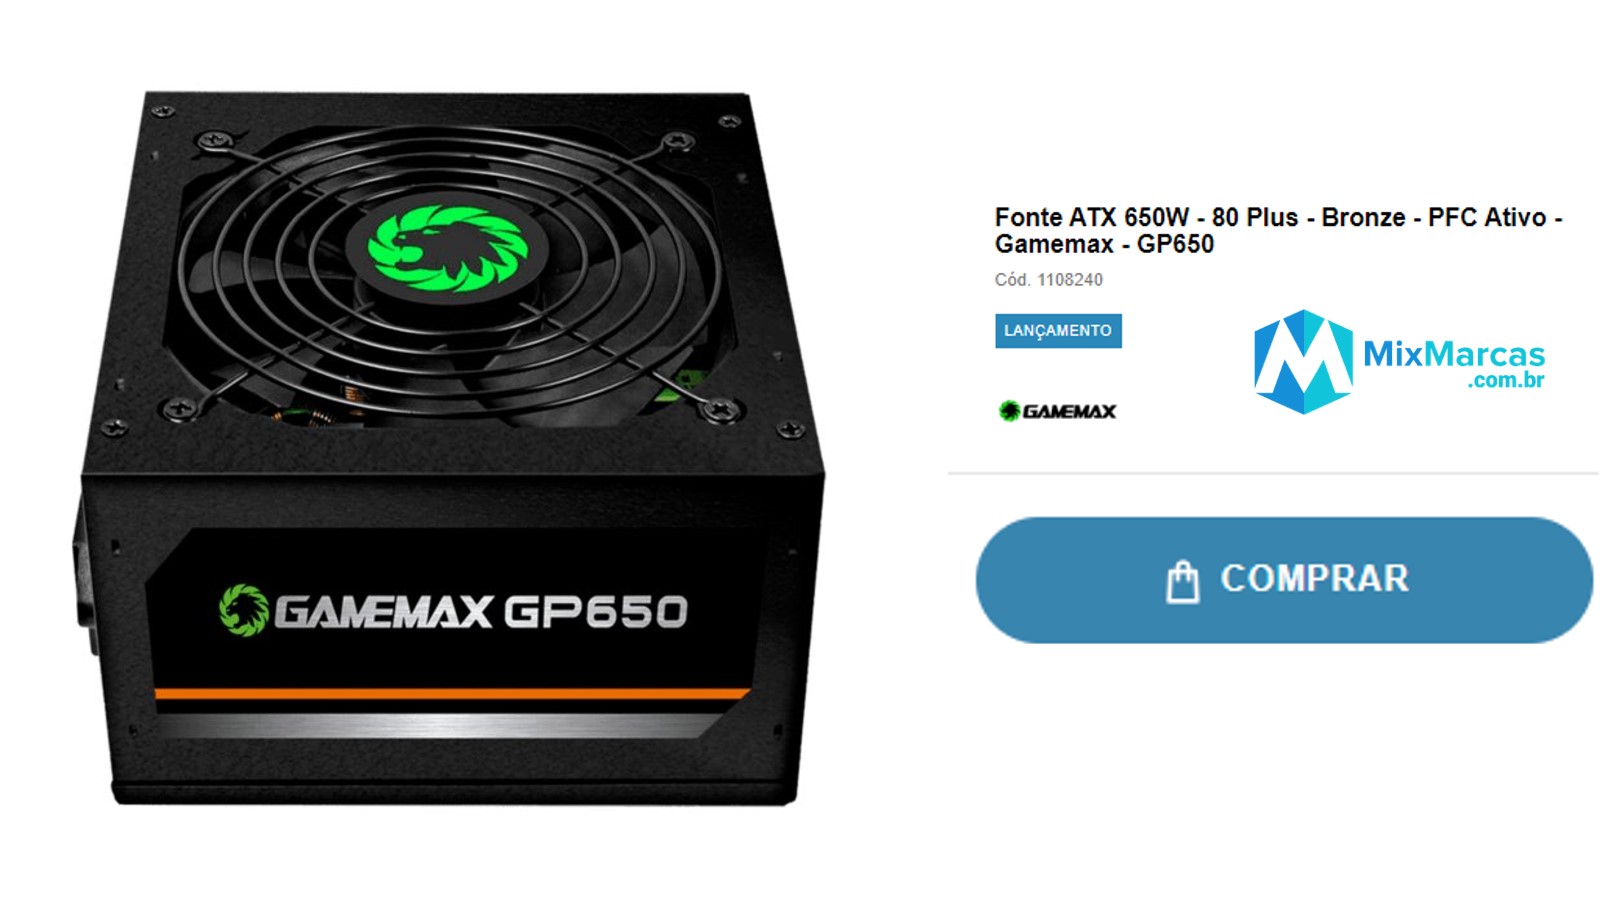 Fonte-ATX-650W-80 Plus-Bronze-PFC-Ativo-Gamemax-GP650.png